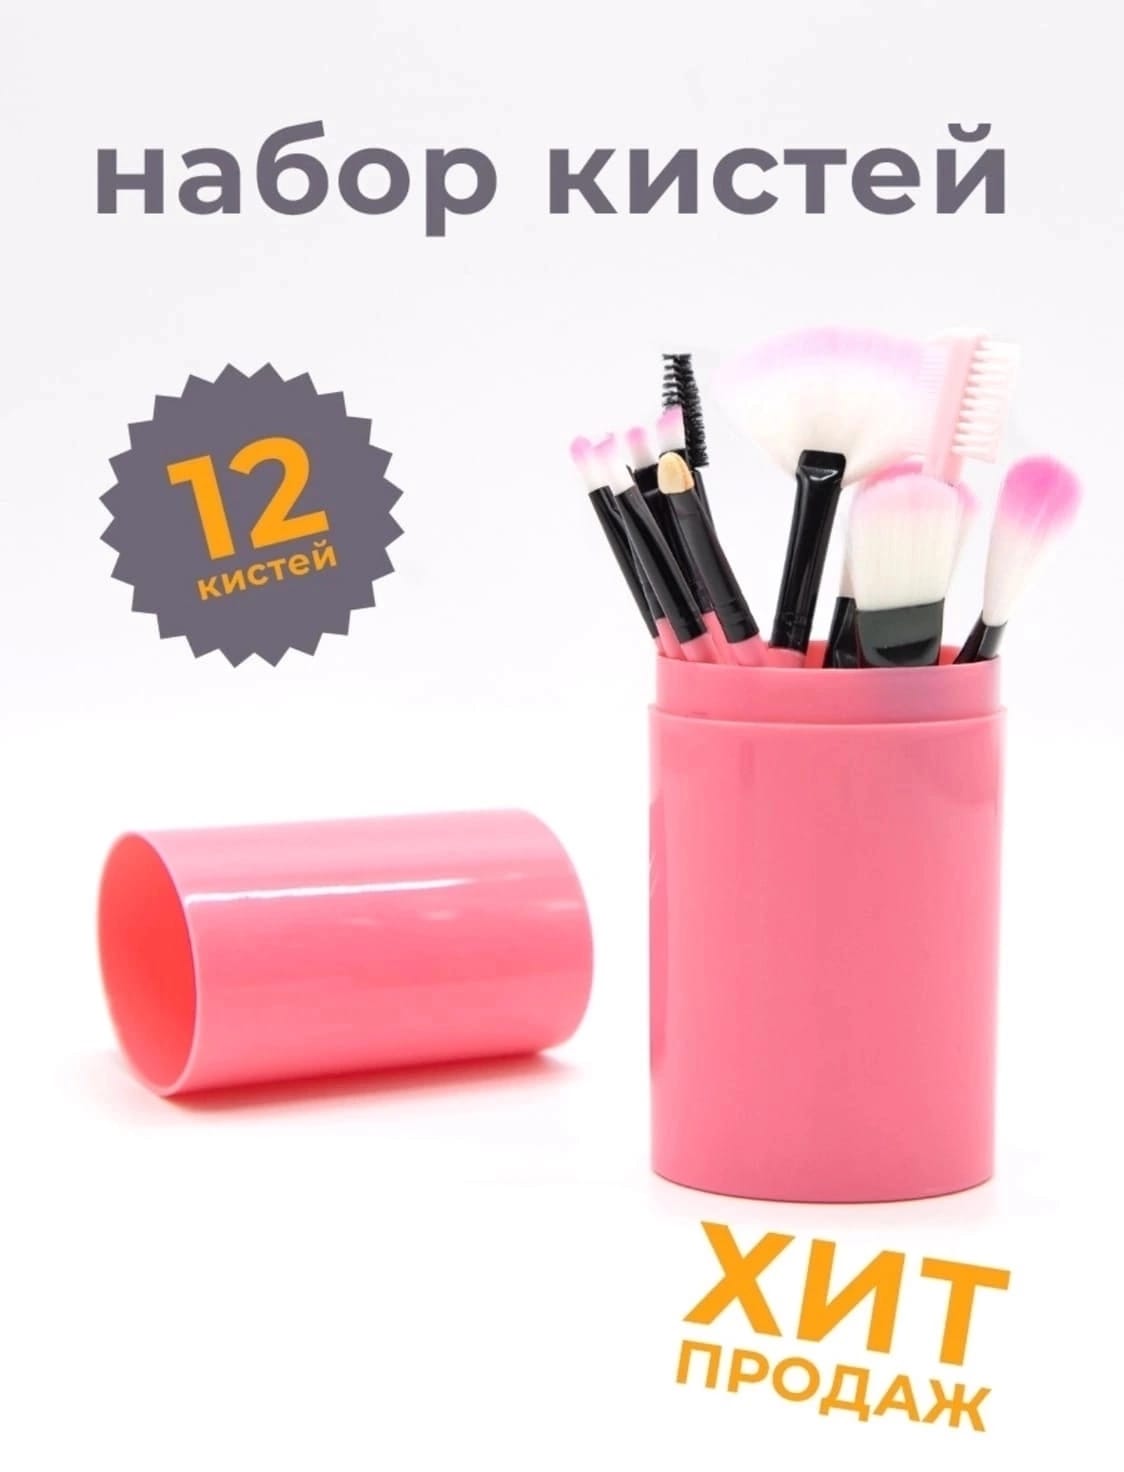 фото Набор кистей для макияжа, 12 предметов 874709 интернет магазин Stok-m.ru